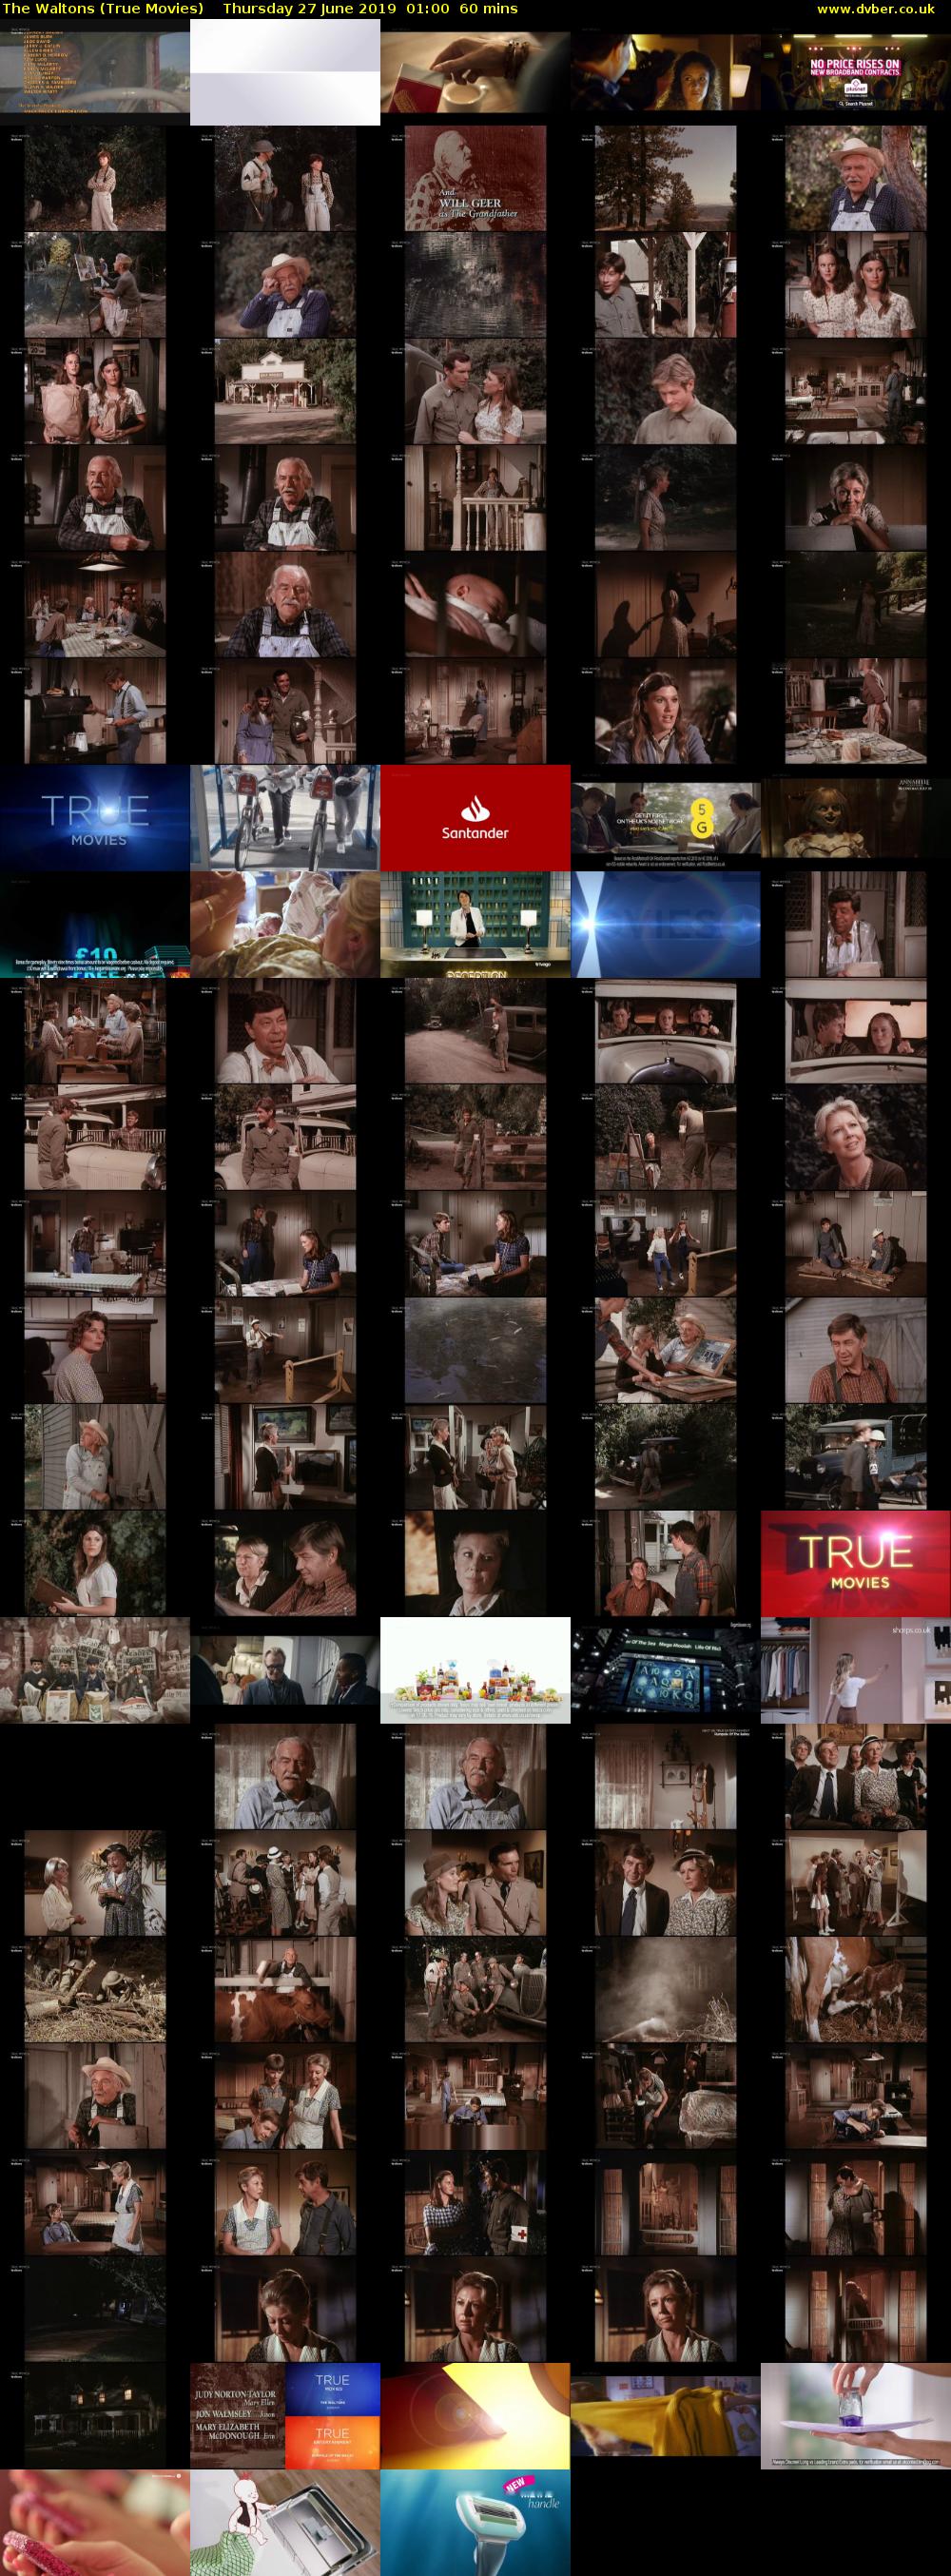 The Waltons (True Movies) Thursday 27 June 2019 01:00 - 02:00